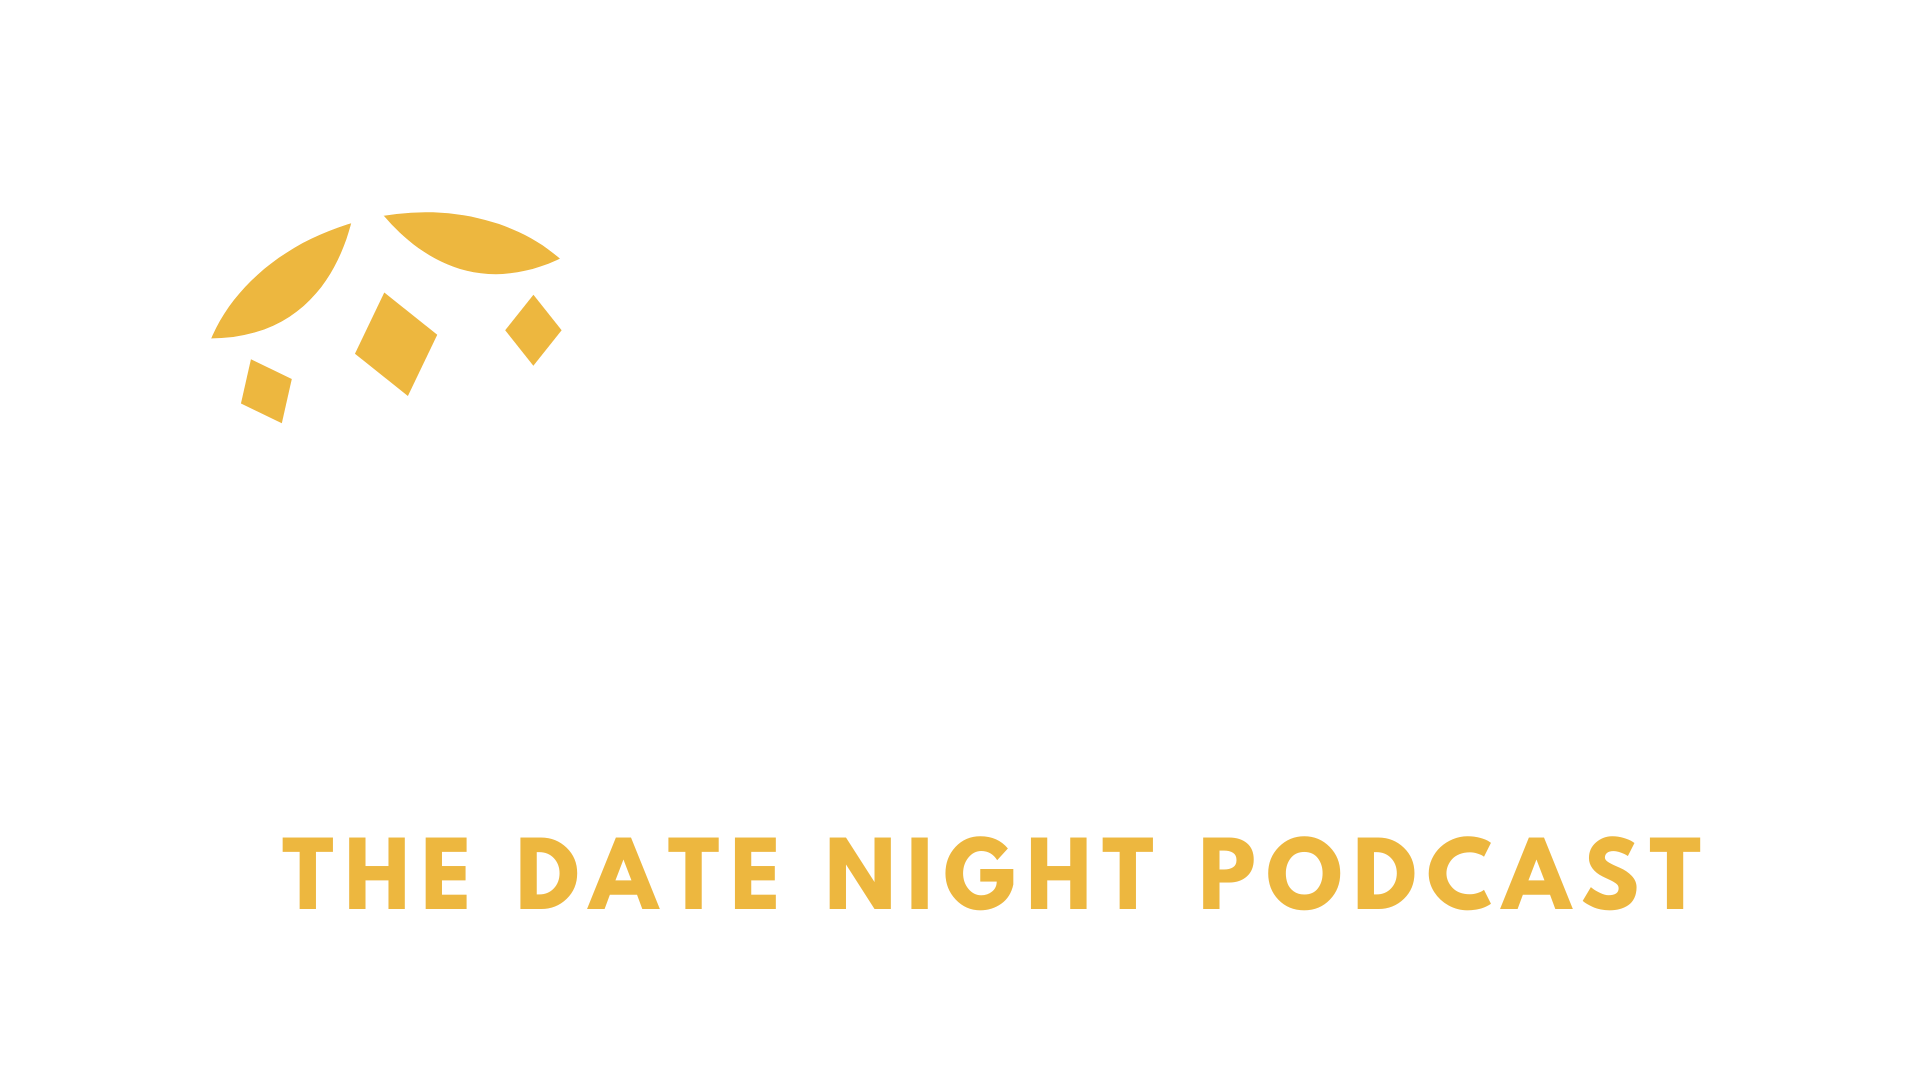 Kings Night